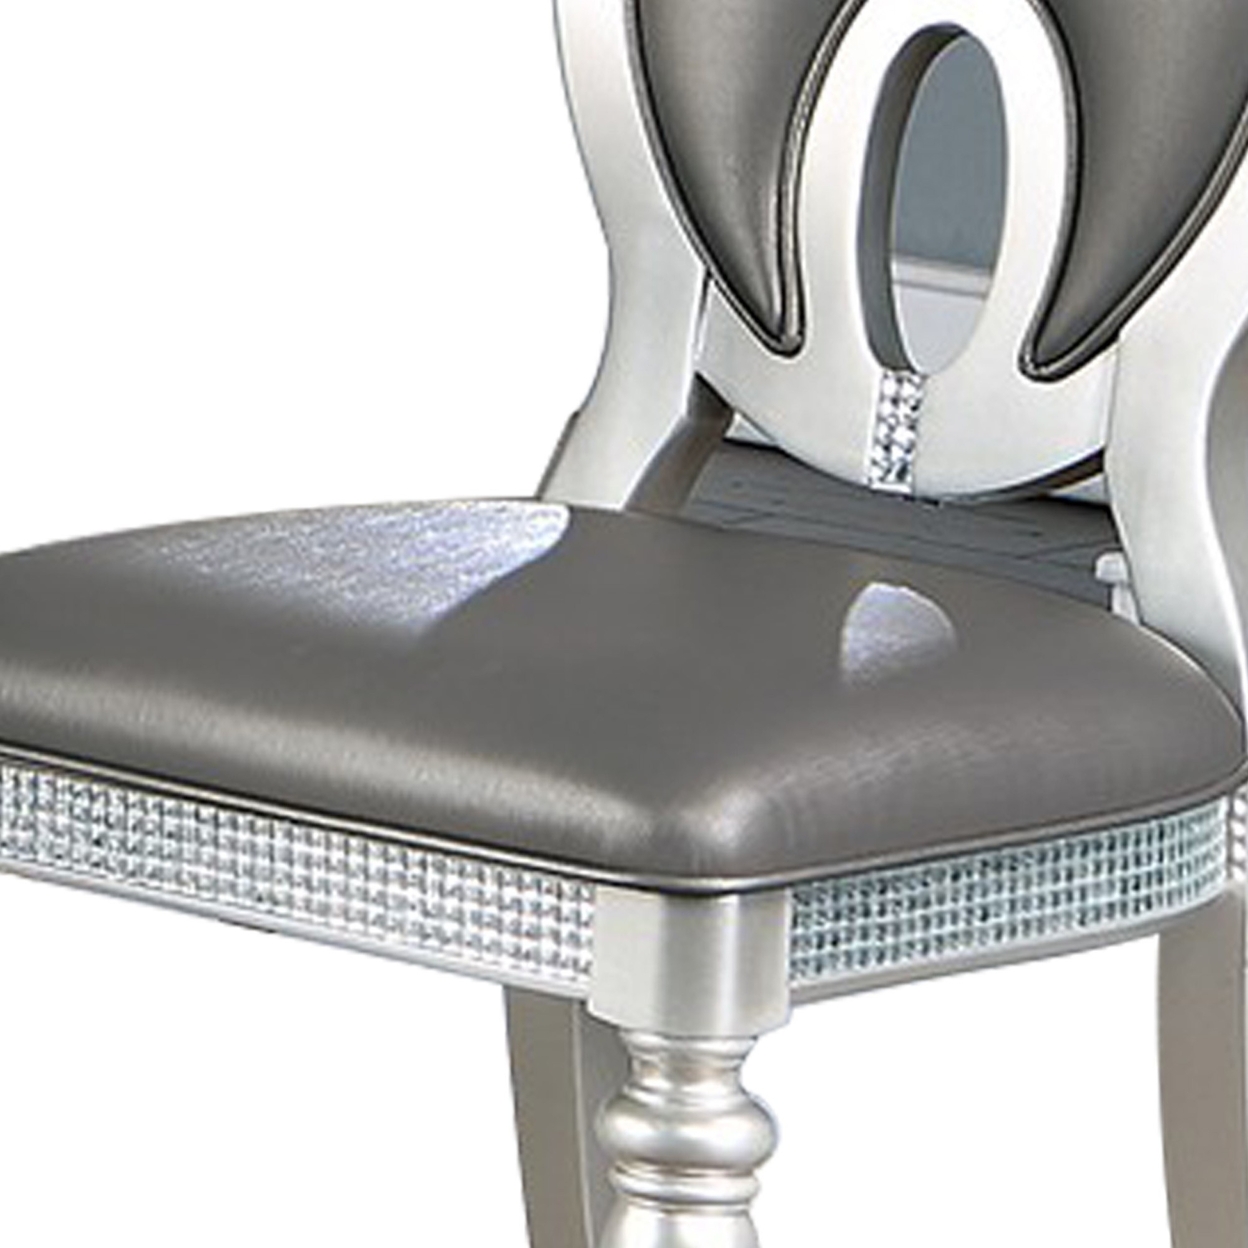 Neil 23 Inch Modern Dining Side Chair, Vegan Faux Leather, Set Of 2, Silver- Saltoro Sherpi